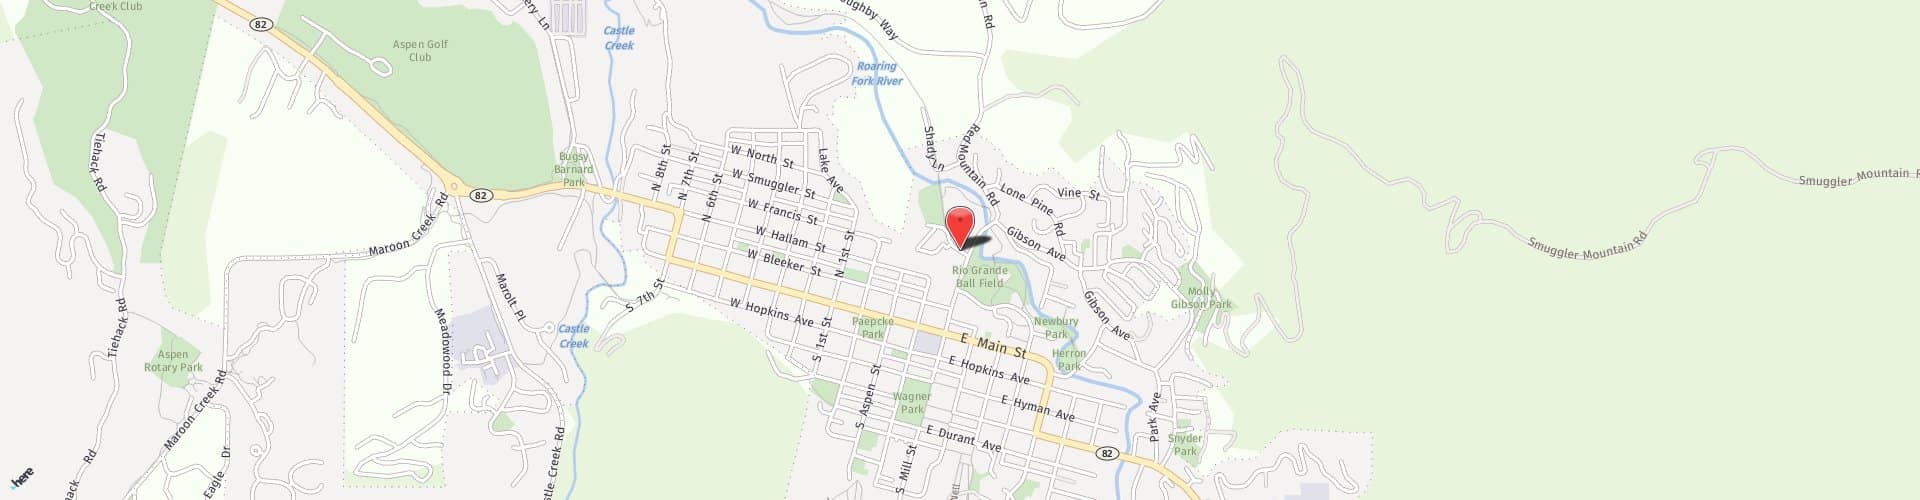 Location Map: 300 Puppy Smith St Aspen, CO 81611